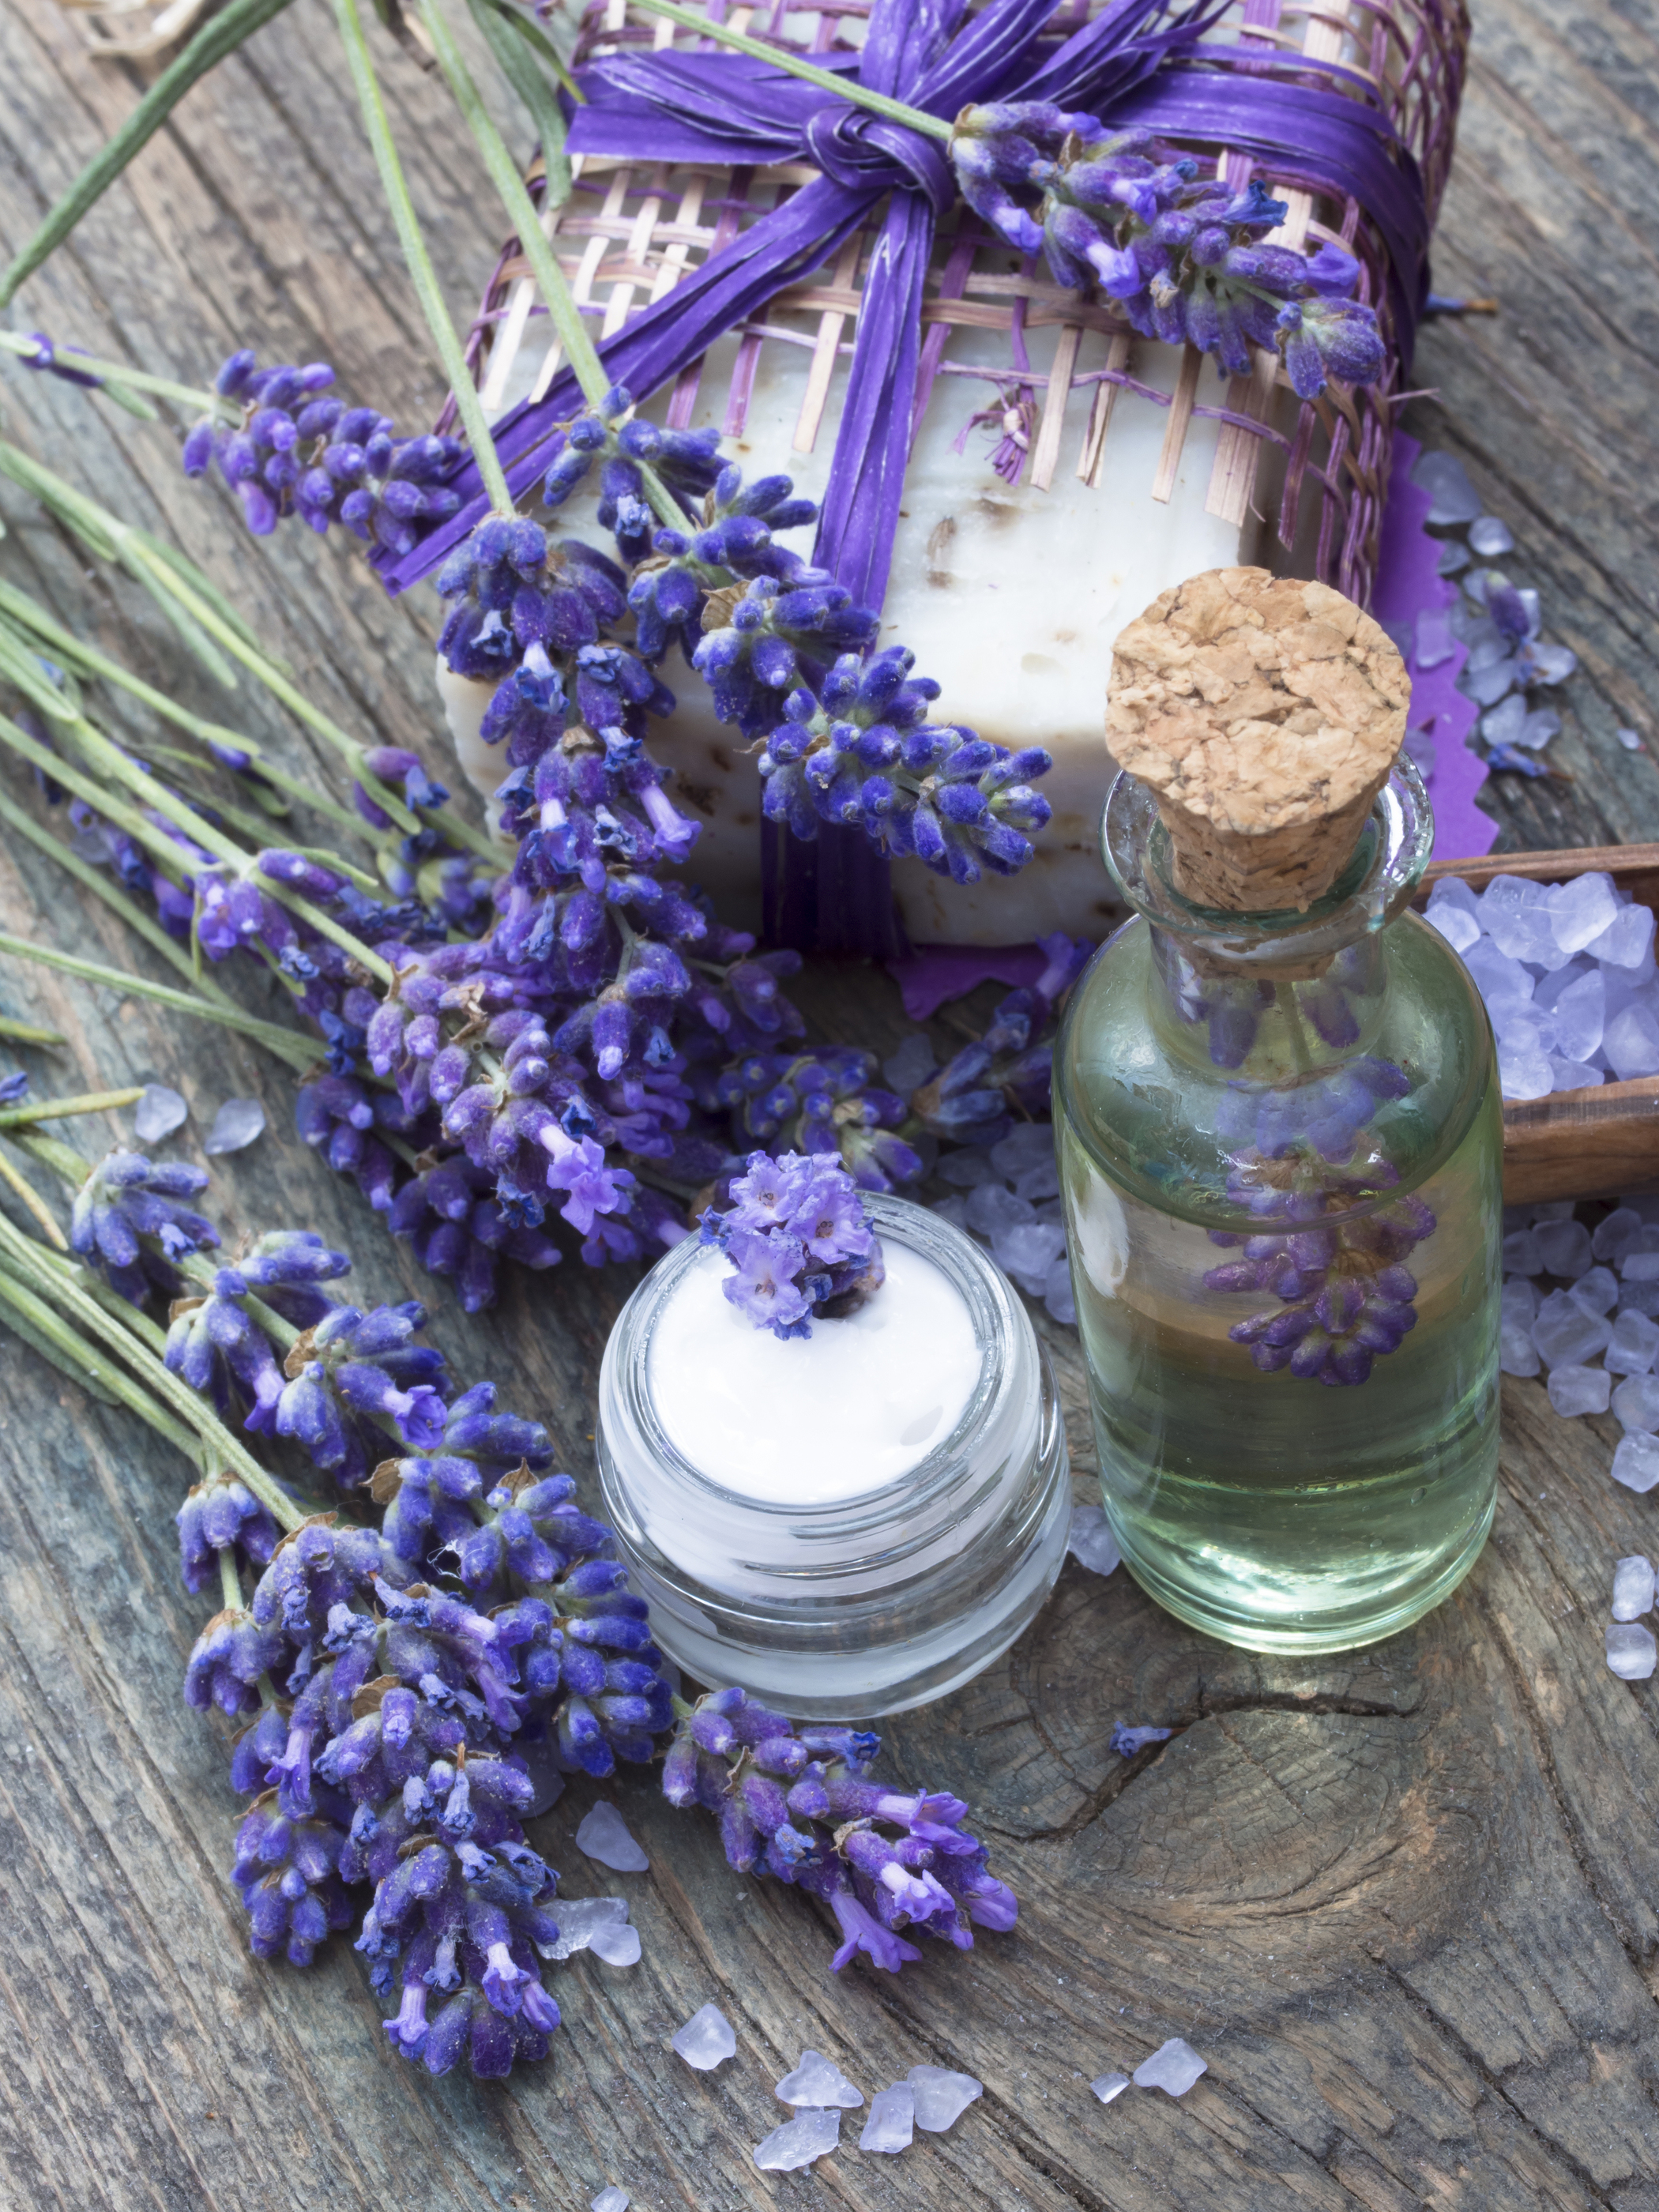 https://www.cozyhomecandle.com/wp-content/uploads/2019/09/lavender-spa-setting.jpg